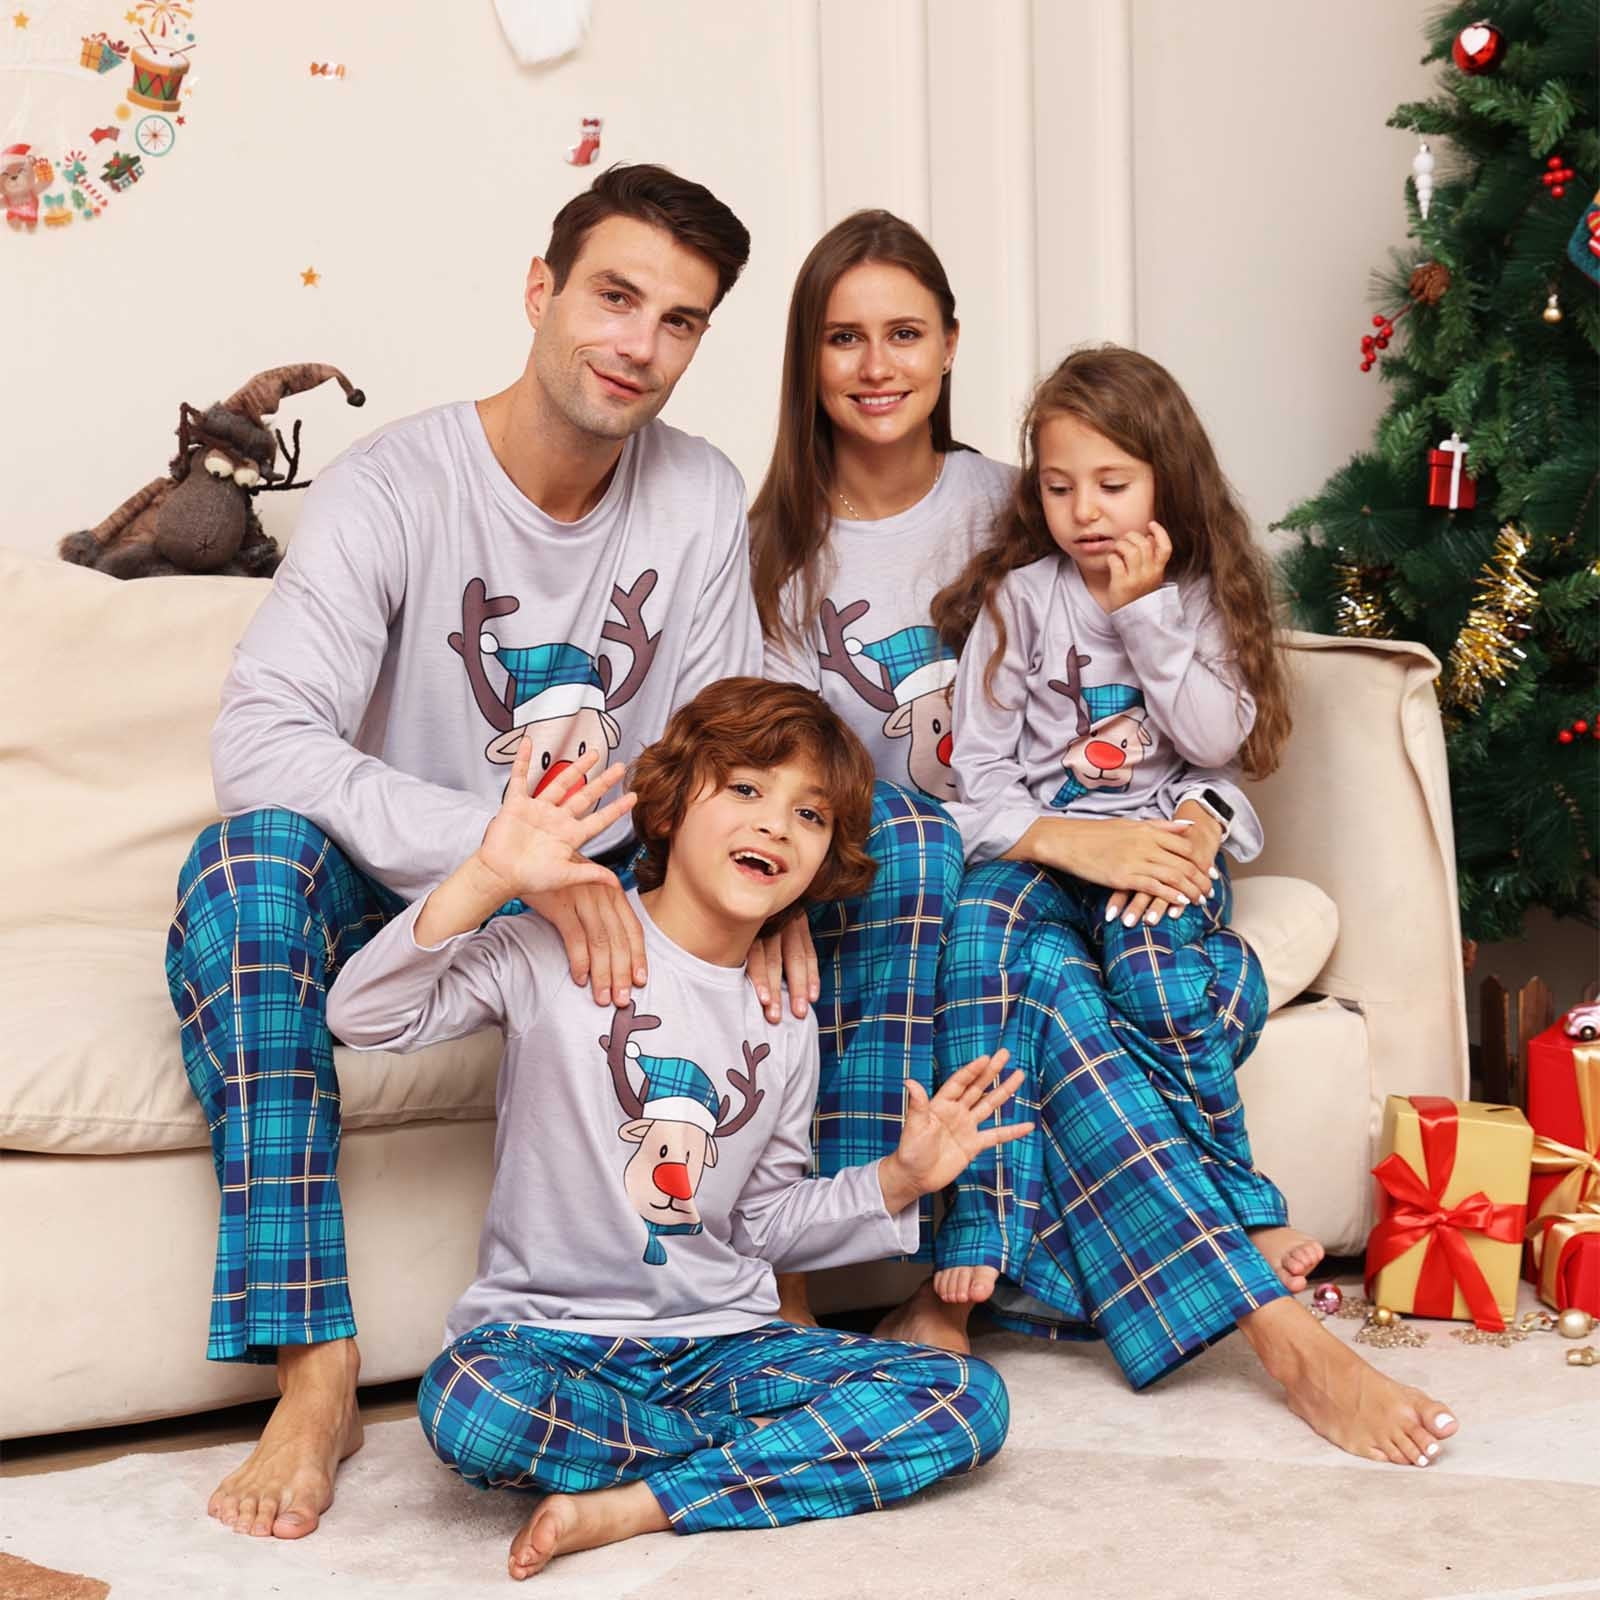 Pajamas Women Set 2PCS Fashion Xmas Elf Reindeer Print Plus Size Family Christmas Pjs Matching Sets Casual Loose Long Sleeve Blue Top Plaid Pants S 4 a4f8b3c4 a460 4ef9 8673 92807f6bf657.54464176fec0d47b5847b578c2964ca3